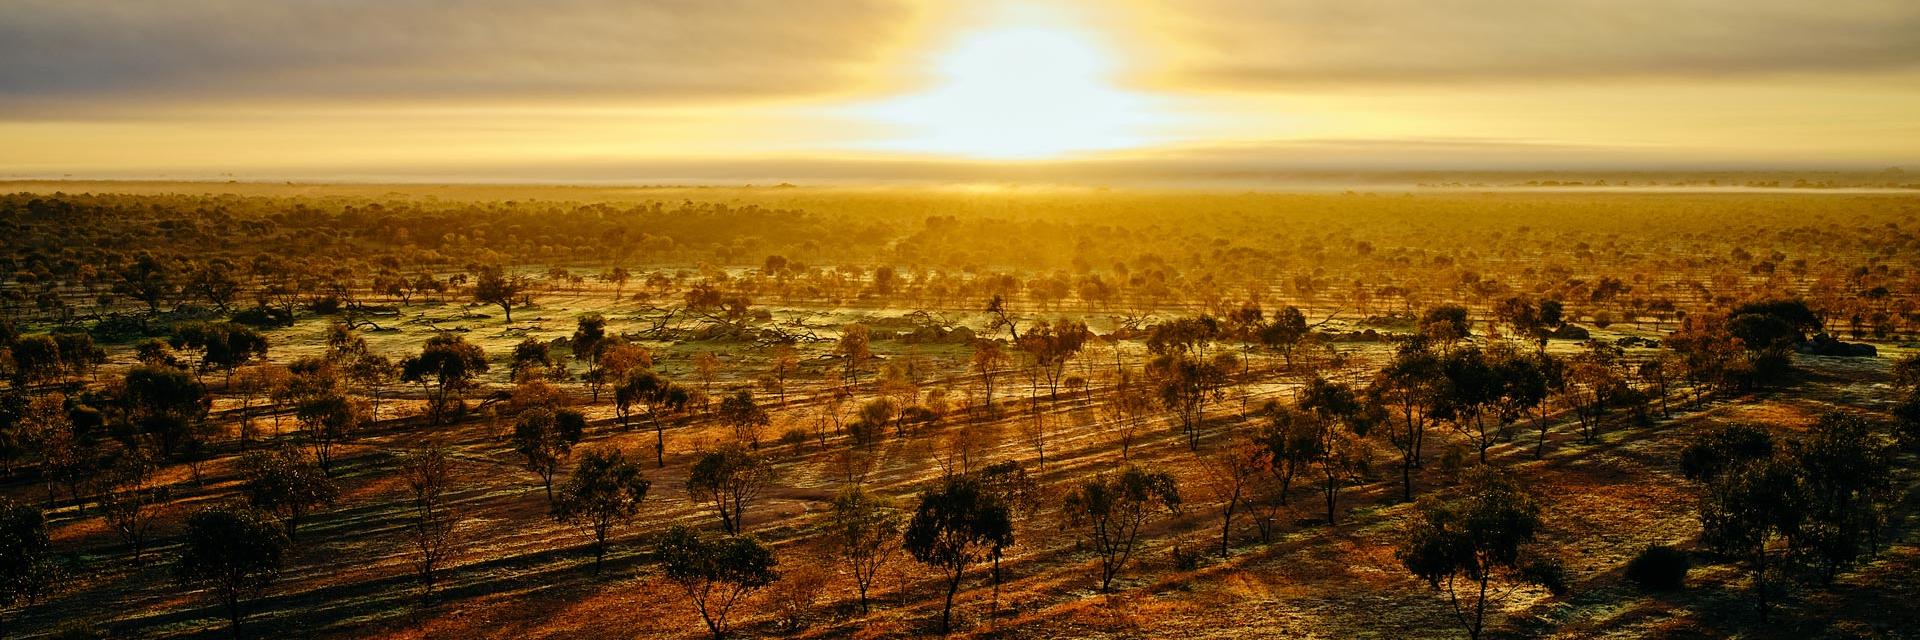 Yarra Yarra Biodiversity Corridor in Western Australia